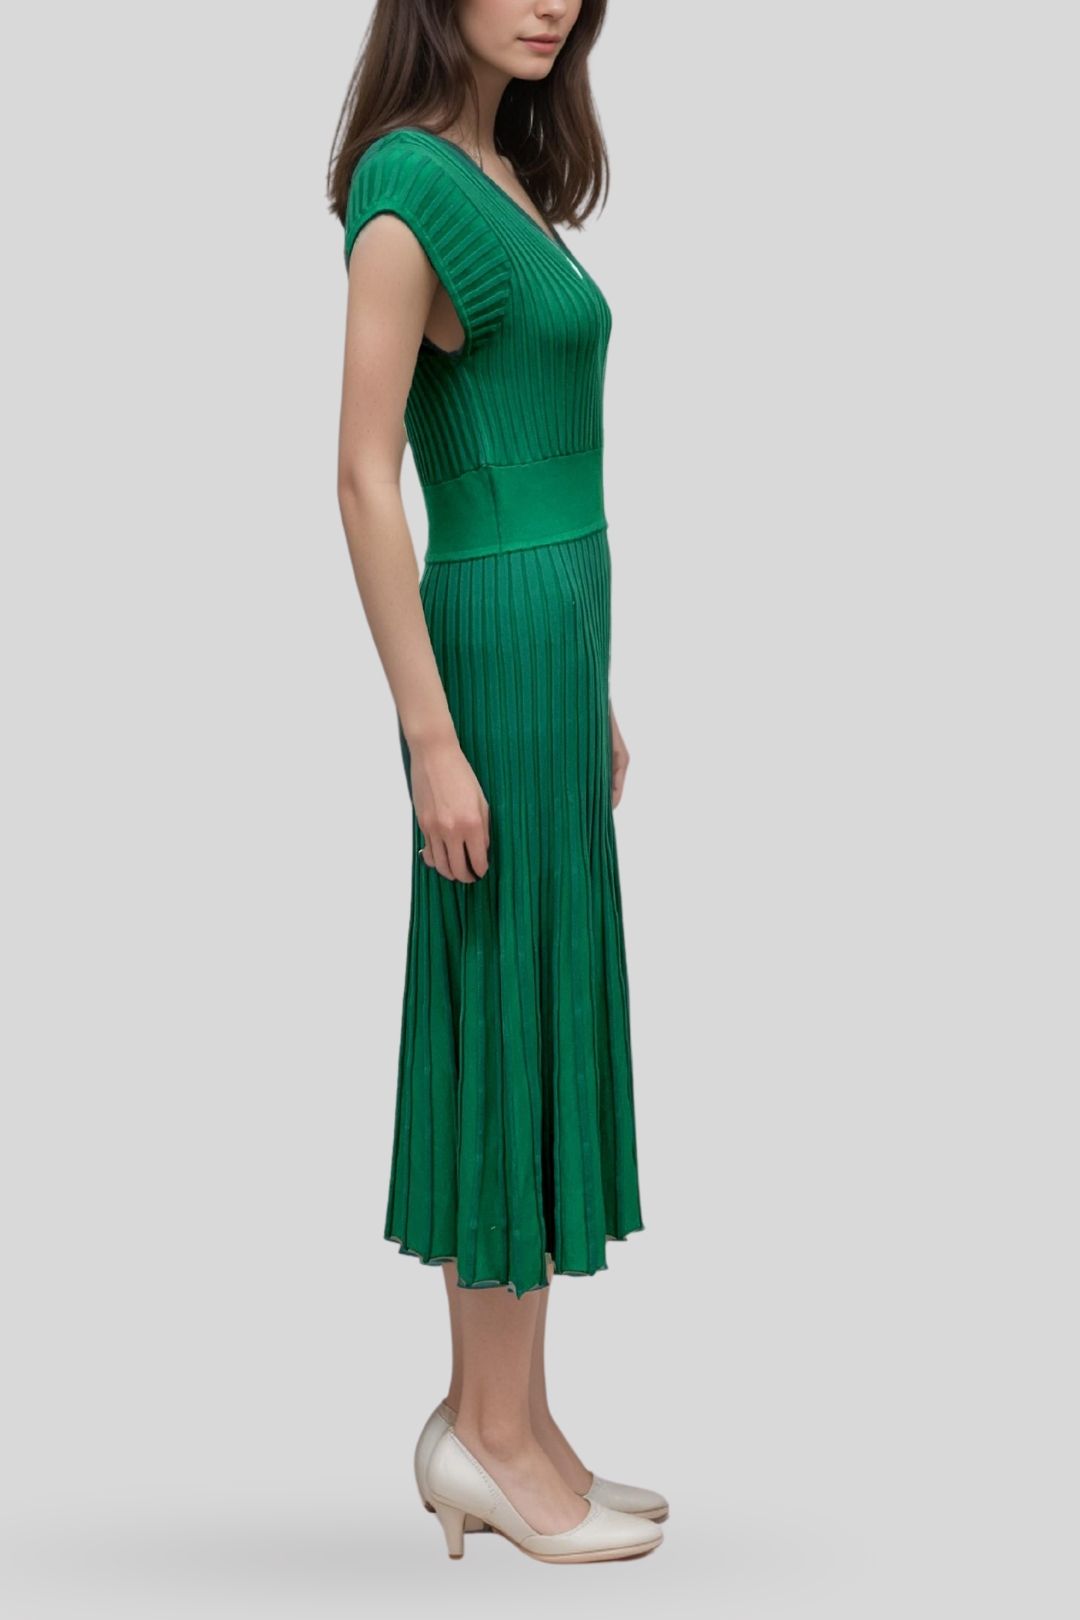 Portmans Ribbed Knit Dress Green